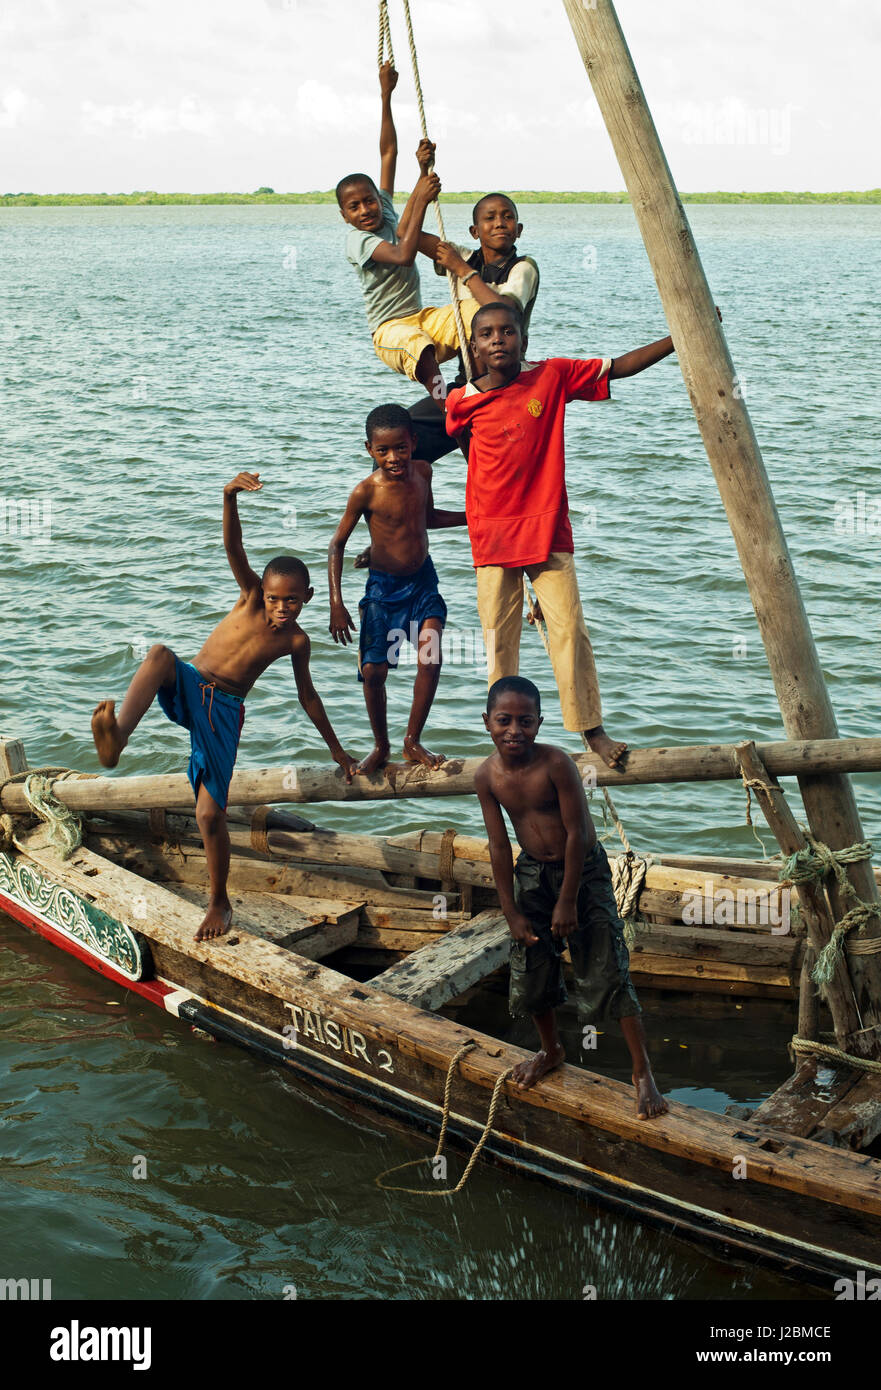 Kenya, Lamu archipelago, Lamu, children having fun on sinking pirate boat Stock Photo